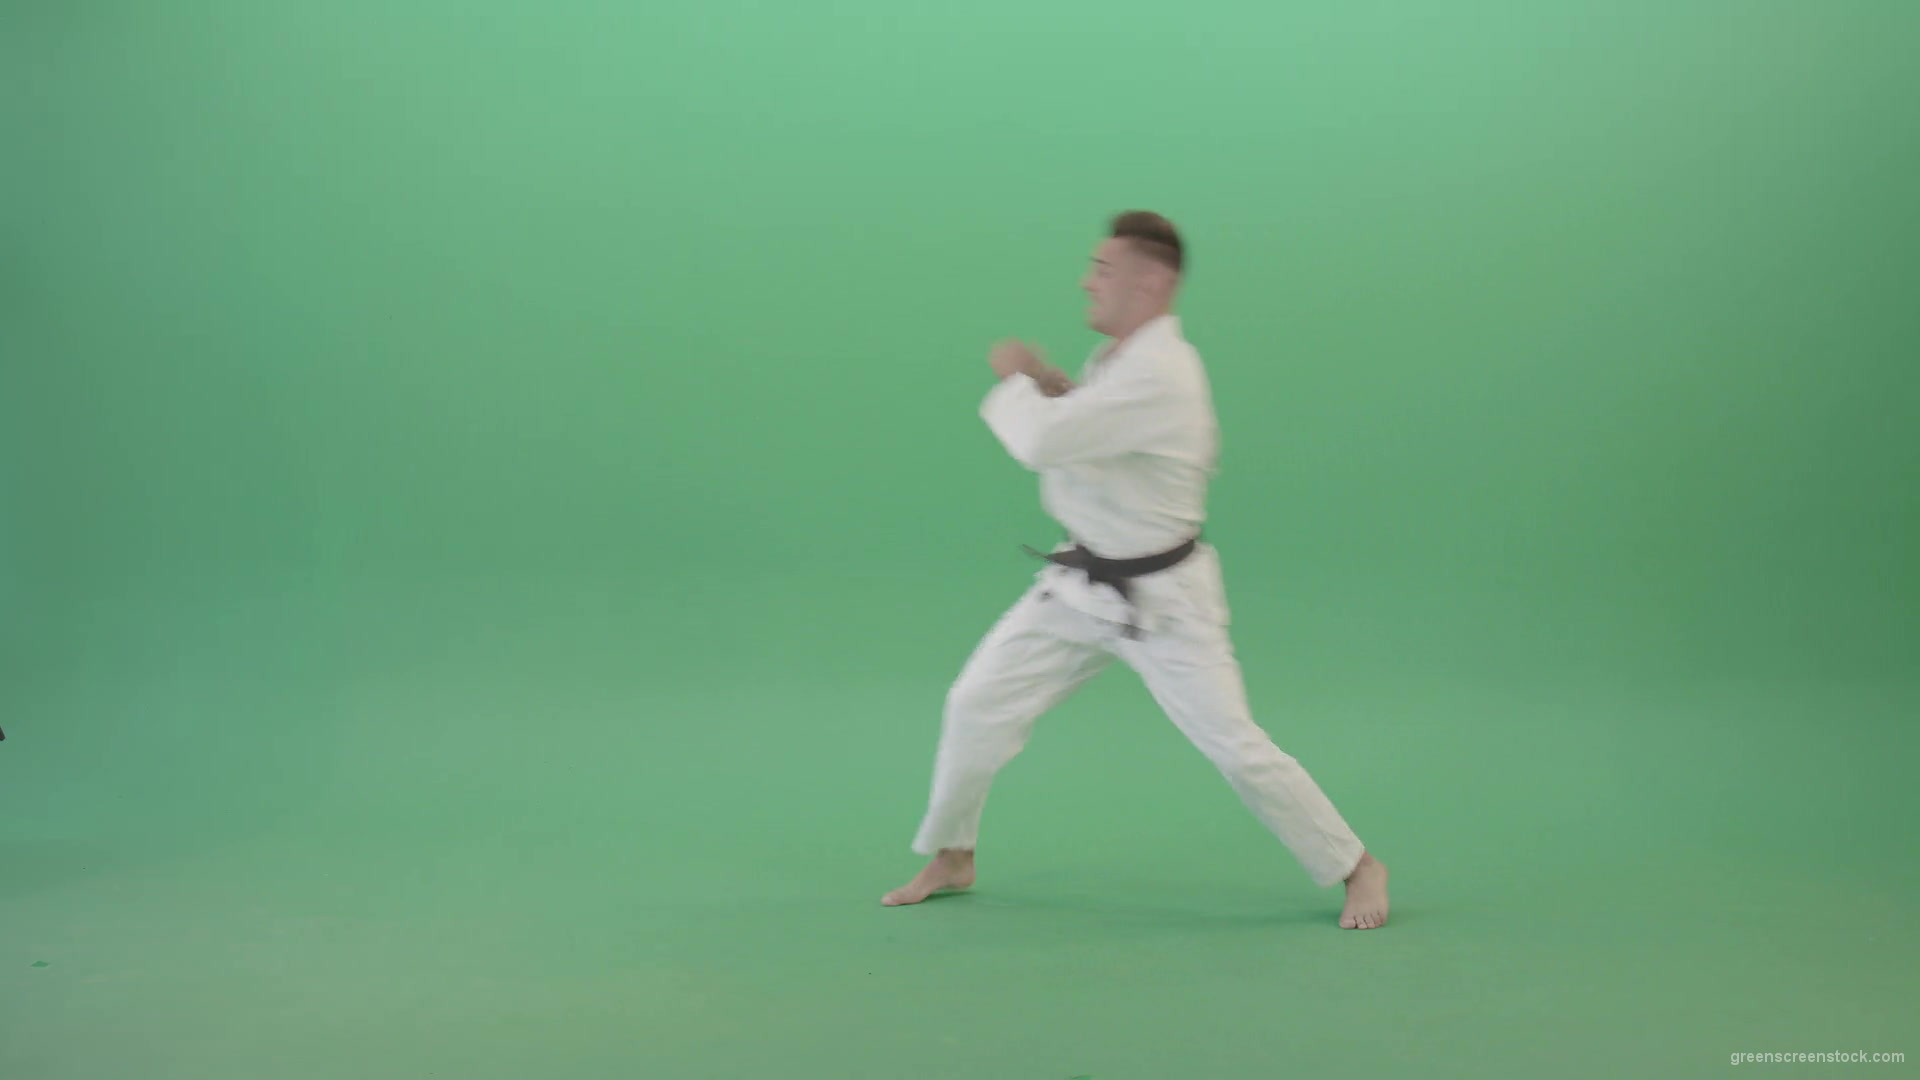 Karate-Sport-man-make-side-kick-isolated-on-green-screen-4K-Video-Footage-1920_004 Green Screen Stock